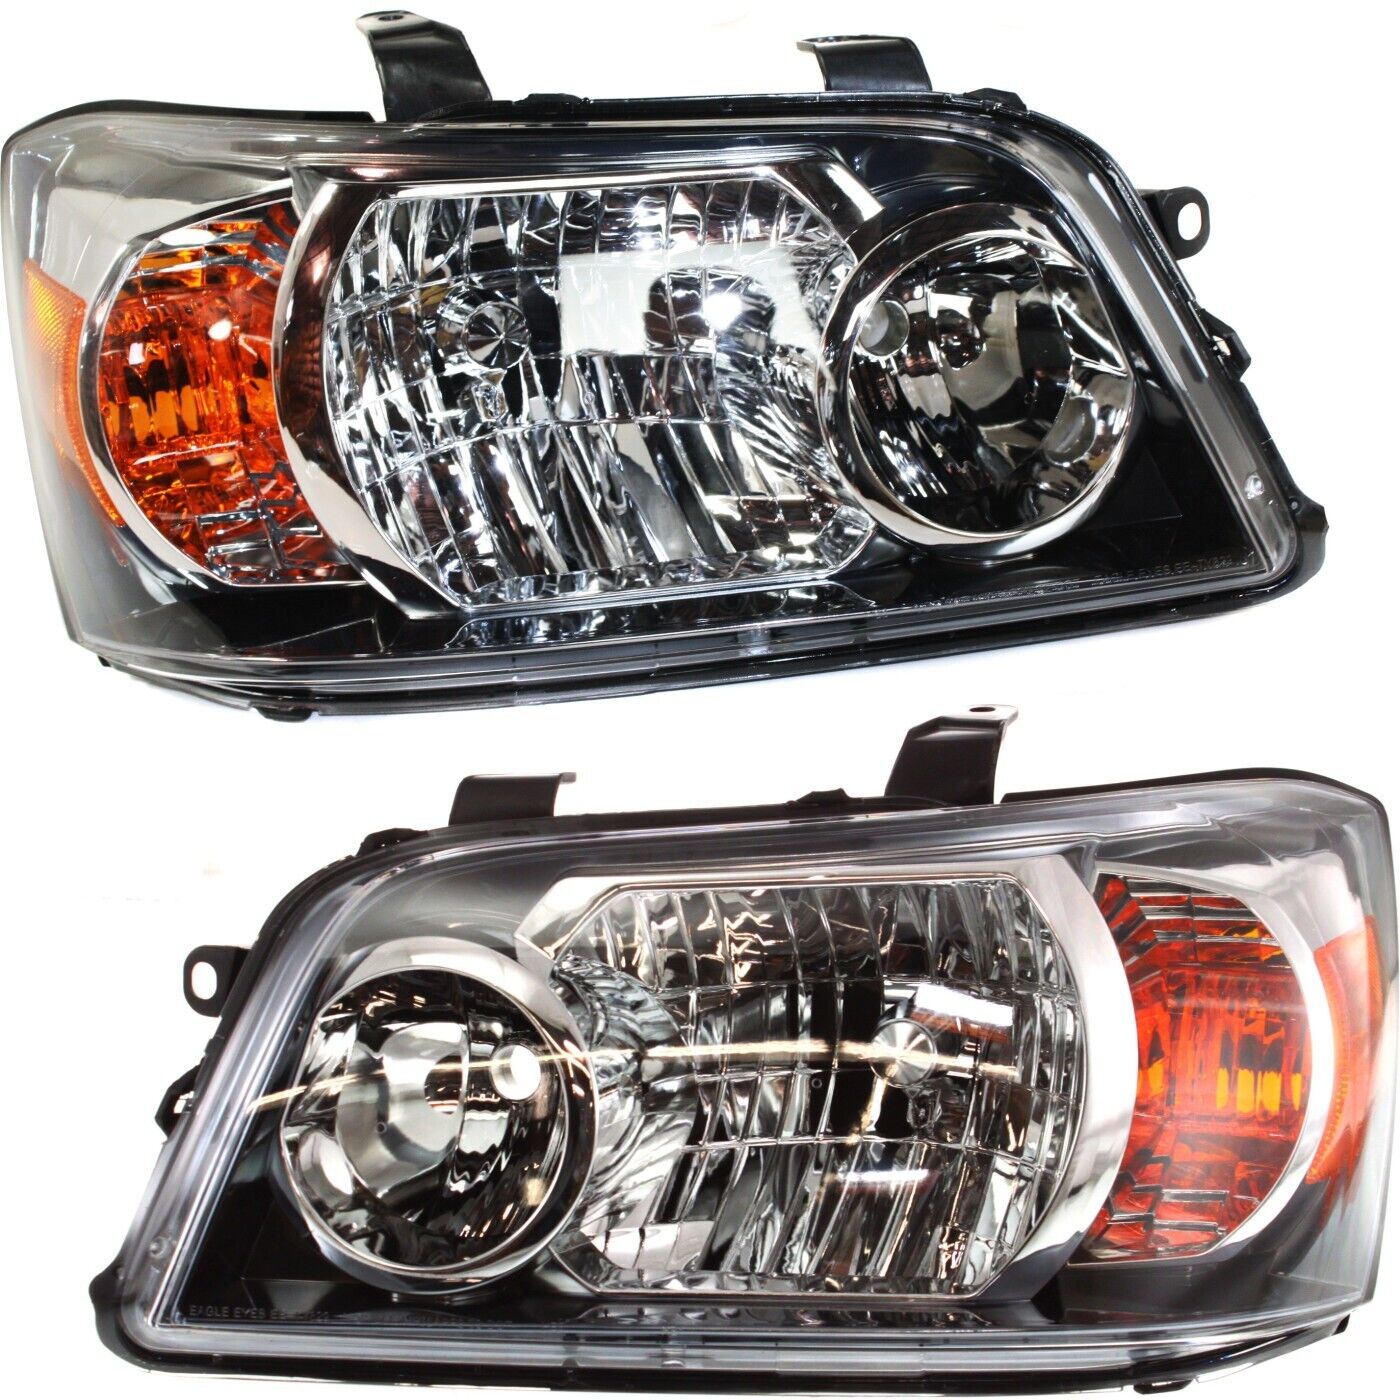 Headlight Set For 2004-2006 Toyota Highlander Driver and Passenger Side